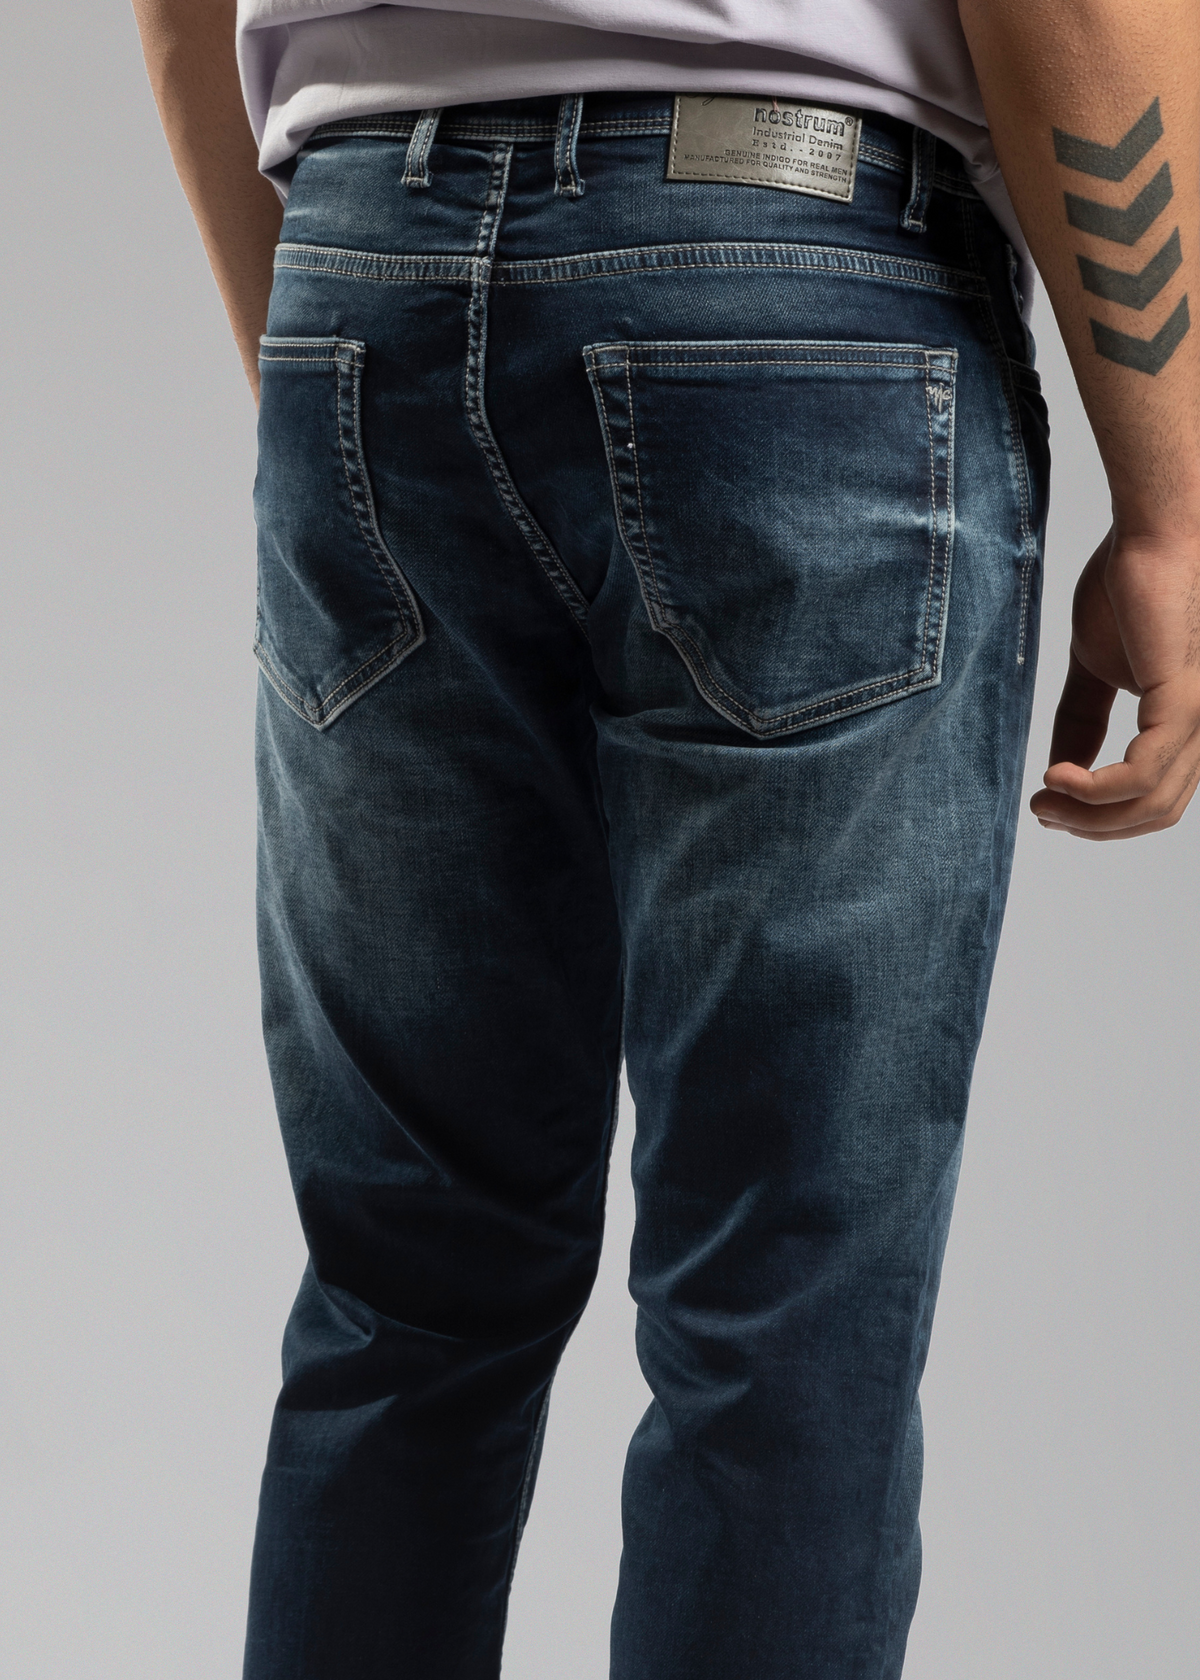 Monton Straight Fit Jeans For Men - Nostrum